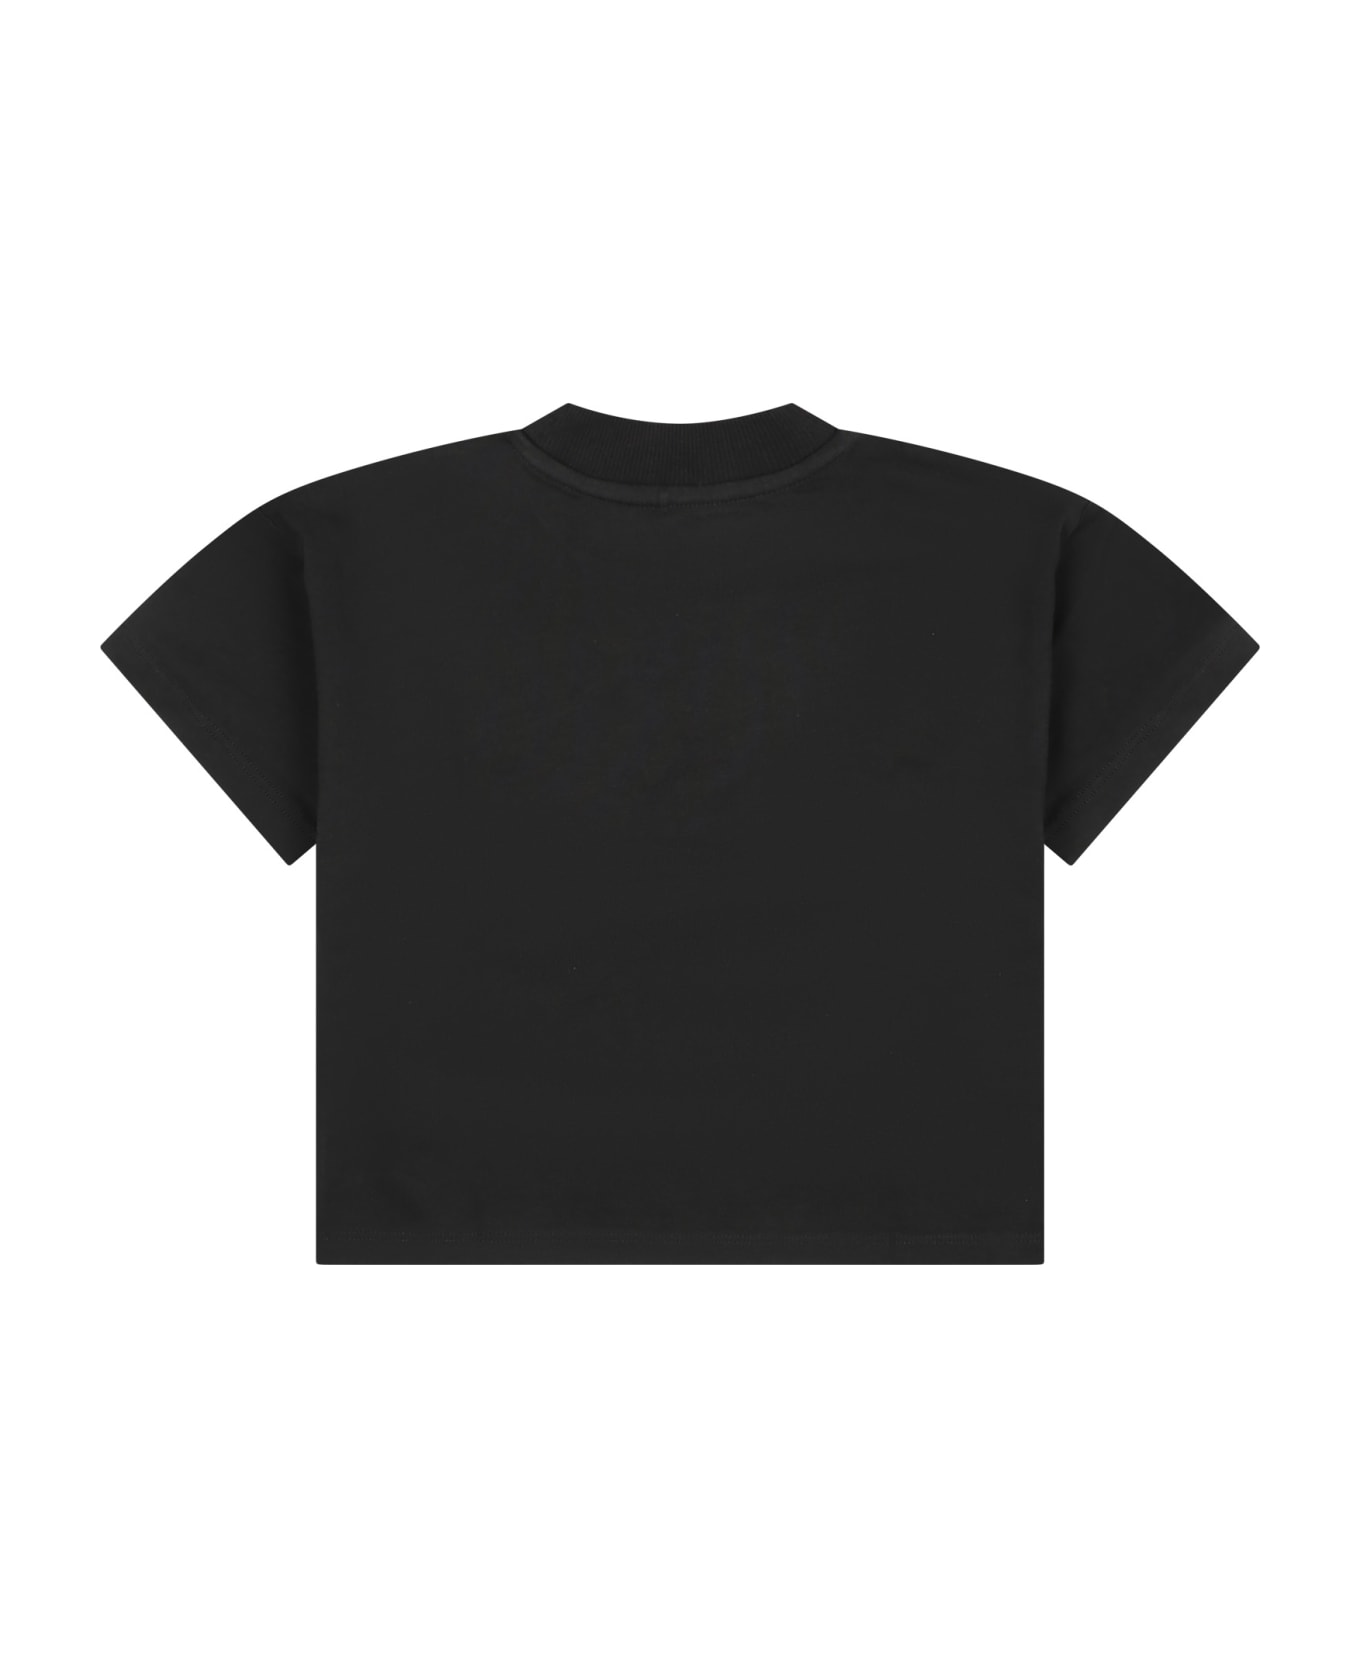 Mini Rodini Black Sweatshirt For Kids With Writing - Grey